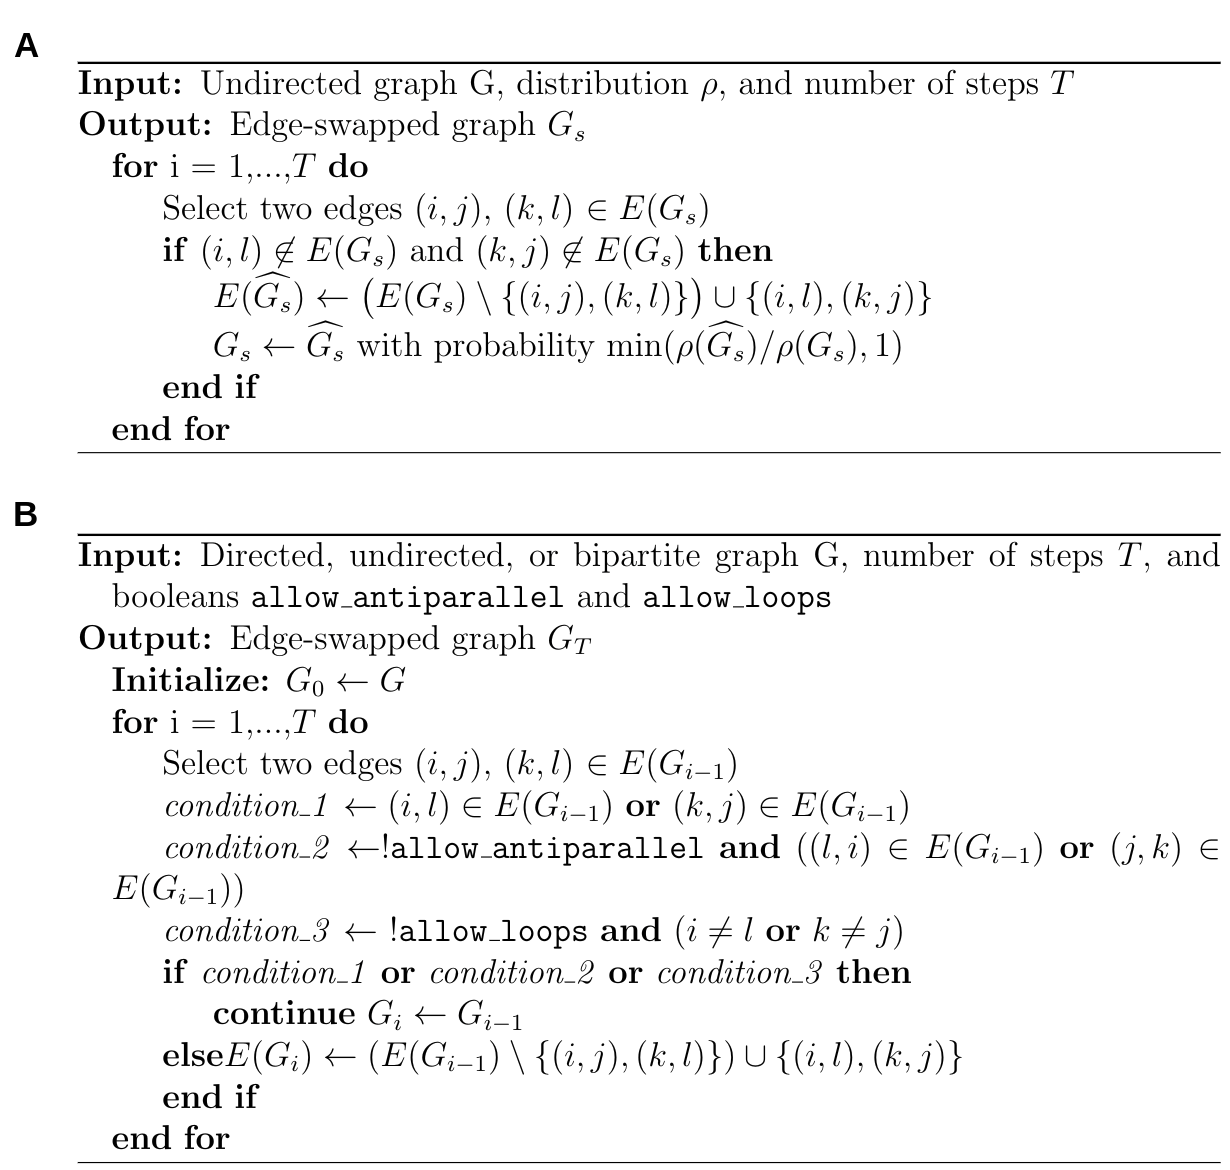 Figure 2: A. XSwap algorithm due to Hanhijärvi, et al. [14]. B. Proposed modification to XSwap algorithm